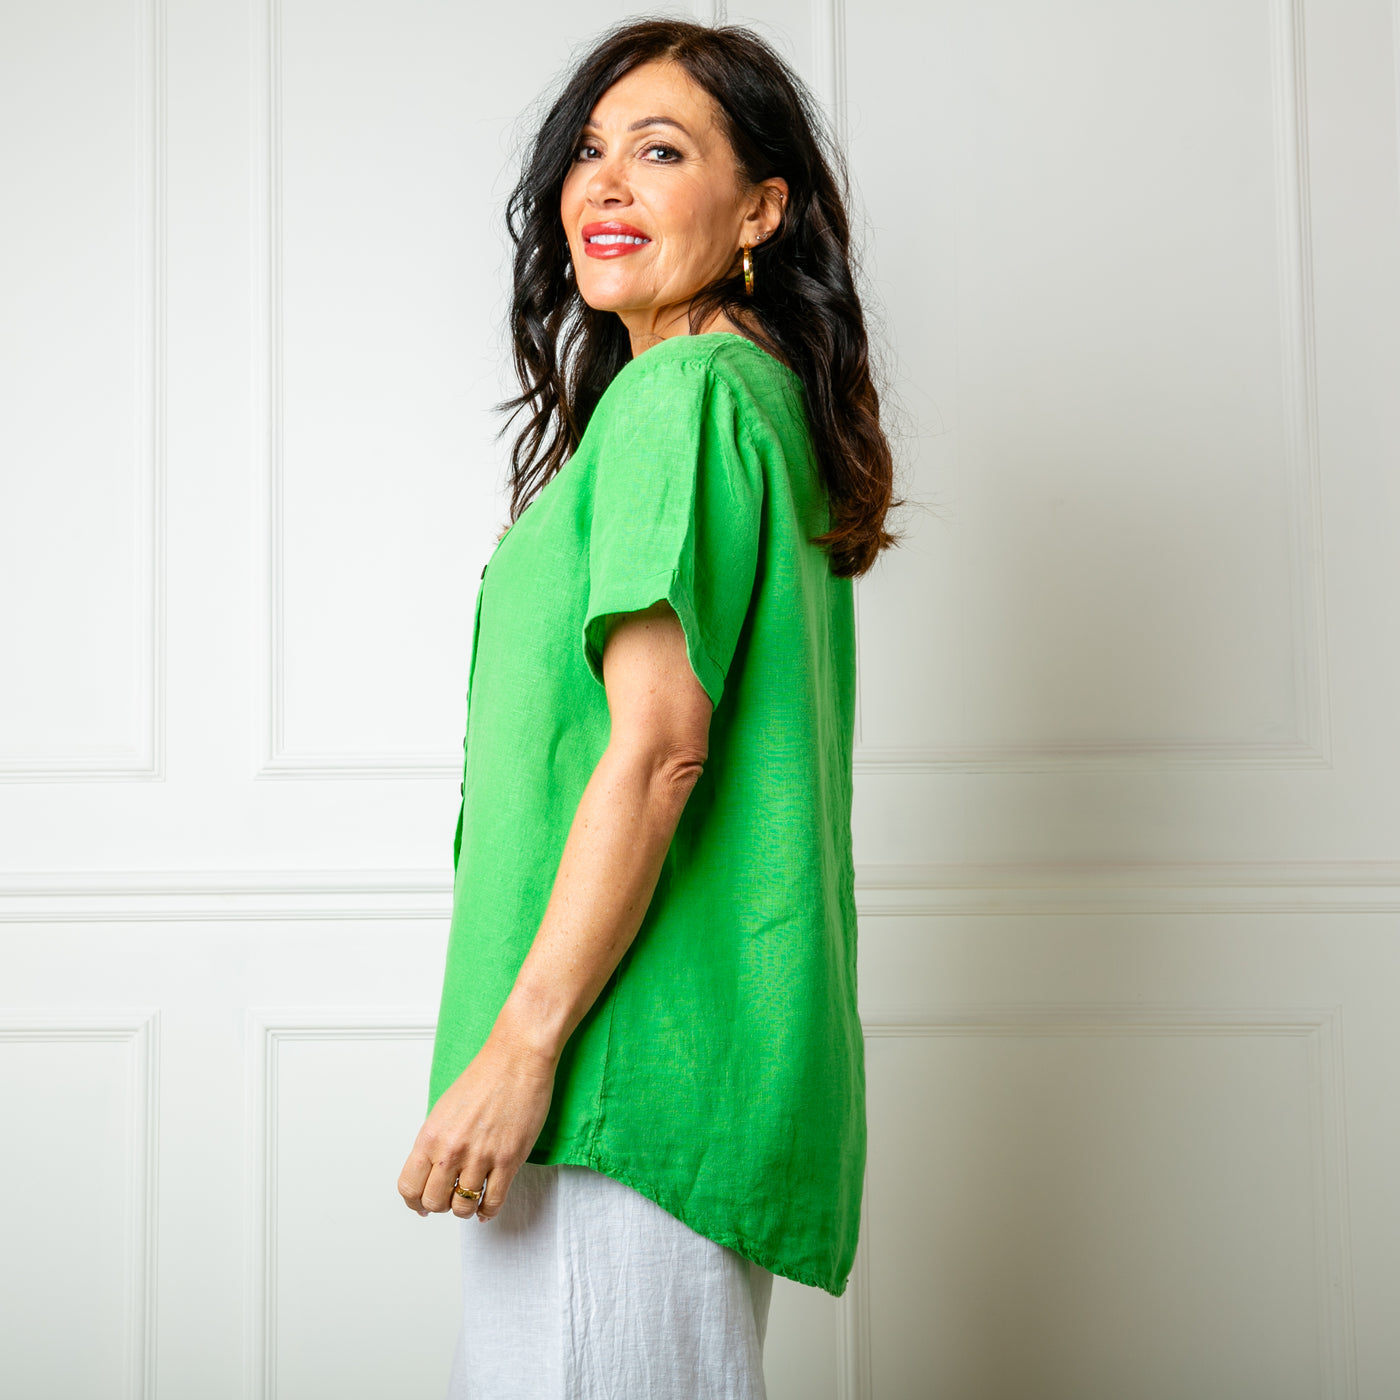 The emerald green Button Down Linen Top made from 100% linen, perfect for a lightweight, cool summer look